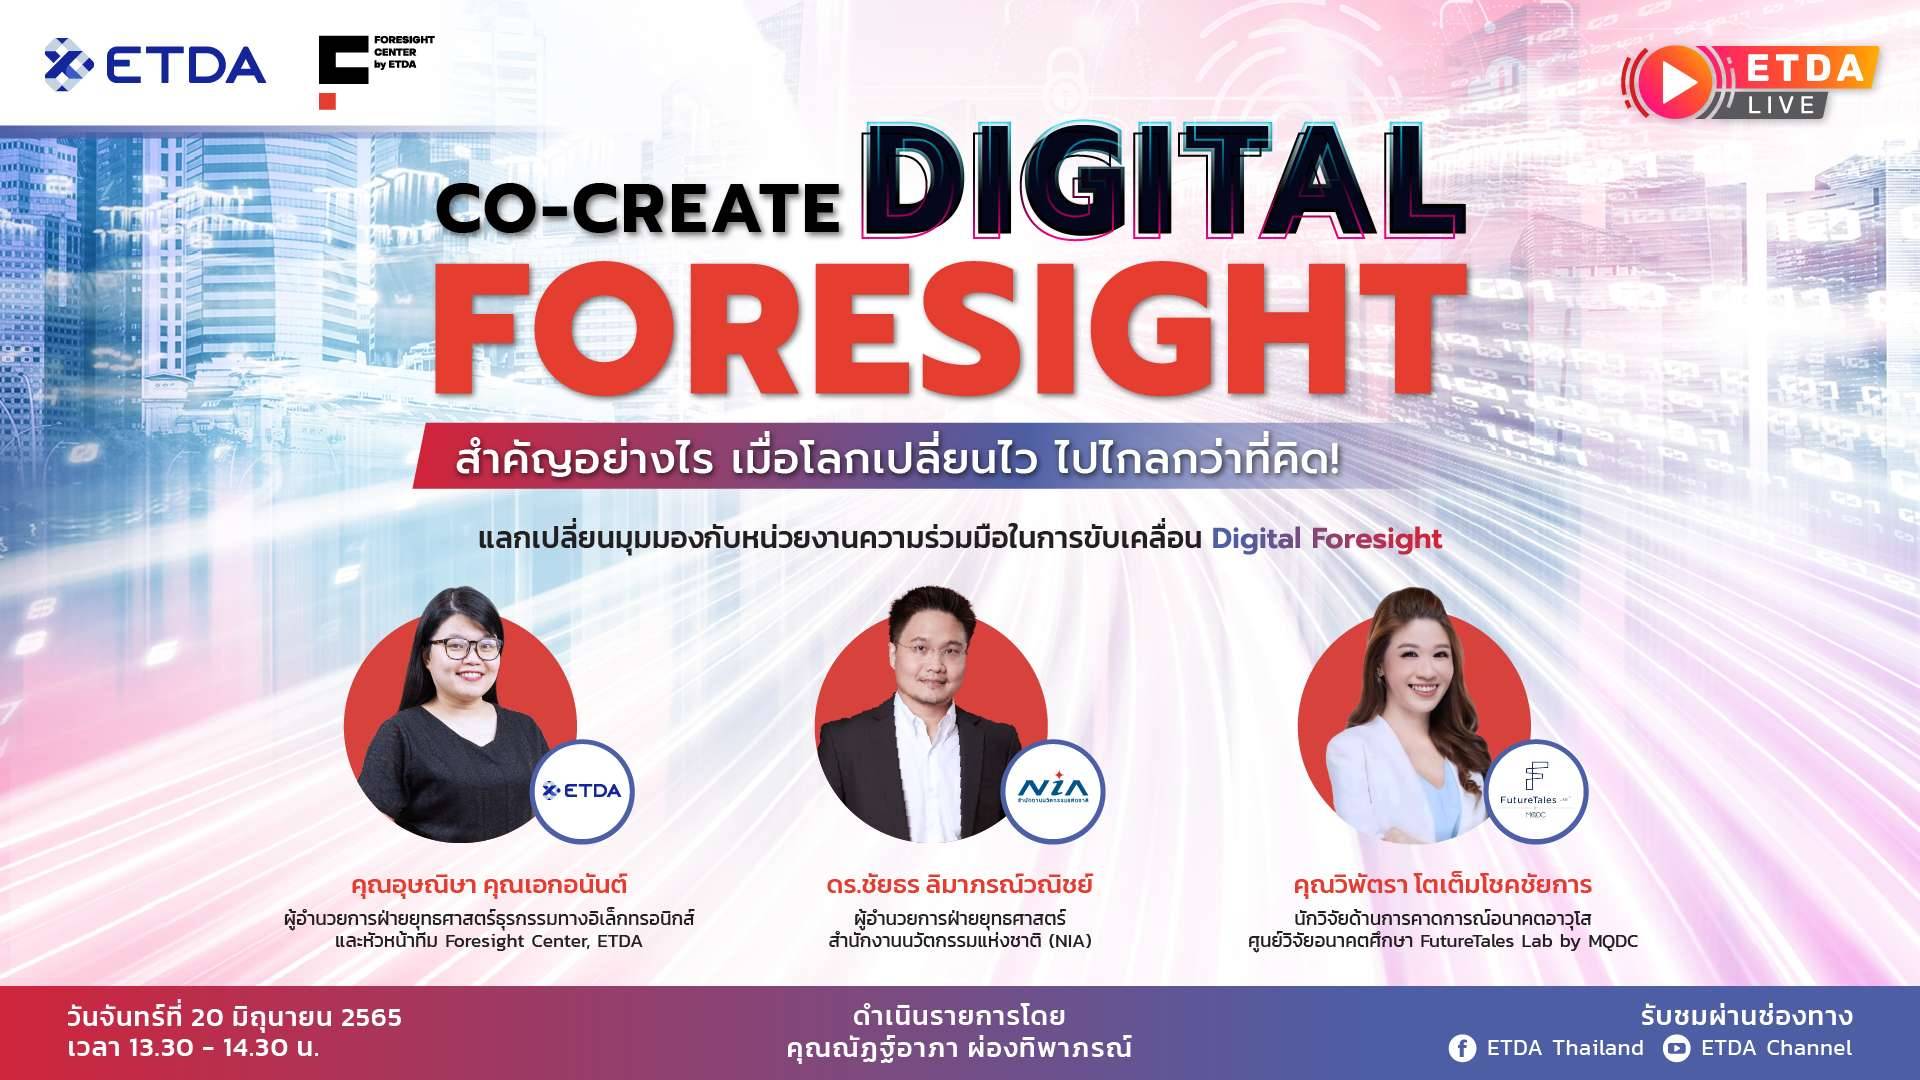 Co-Create Digital Foresight